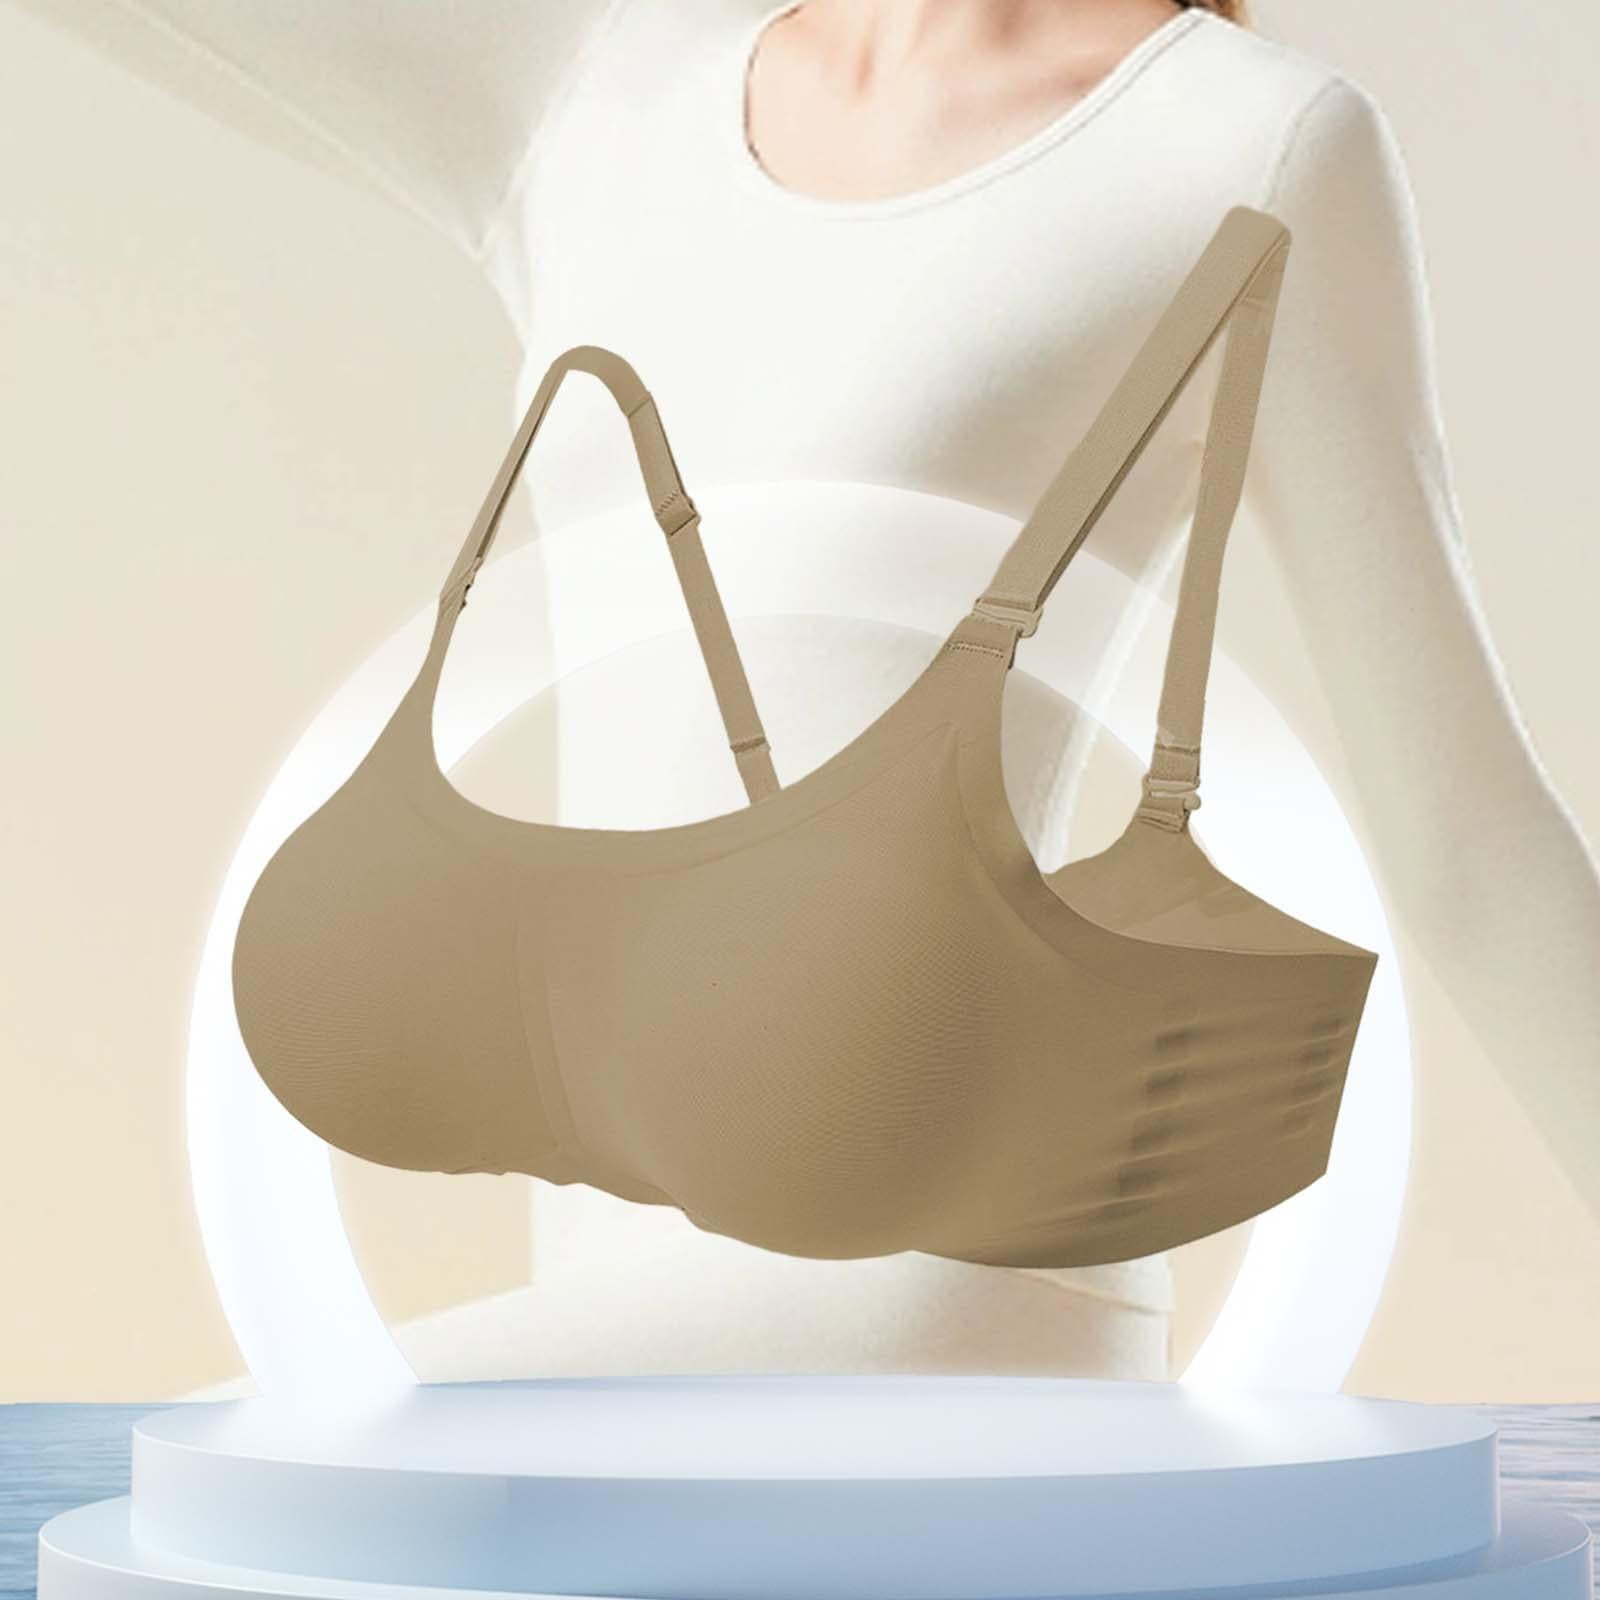 600g/36B Delicate Silicone Breast Forms False Boobs+ Wear Bra Cross Dresser